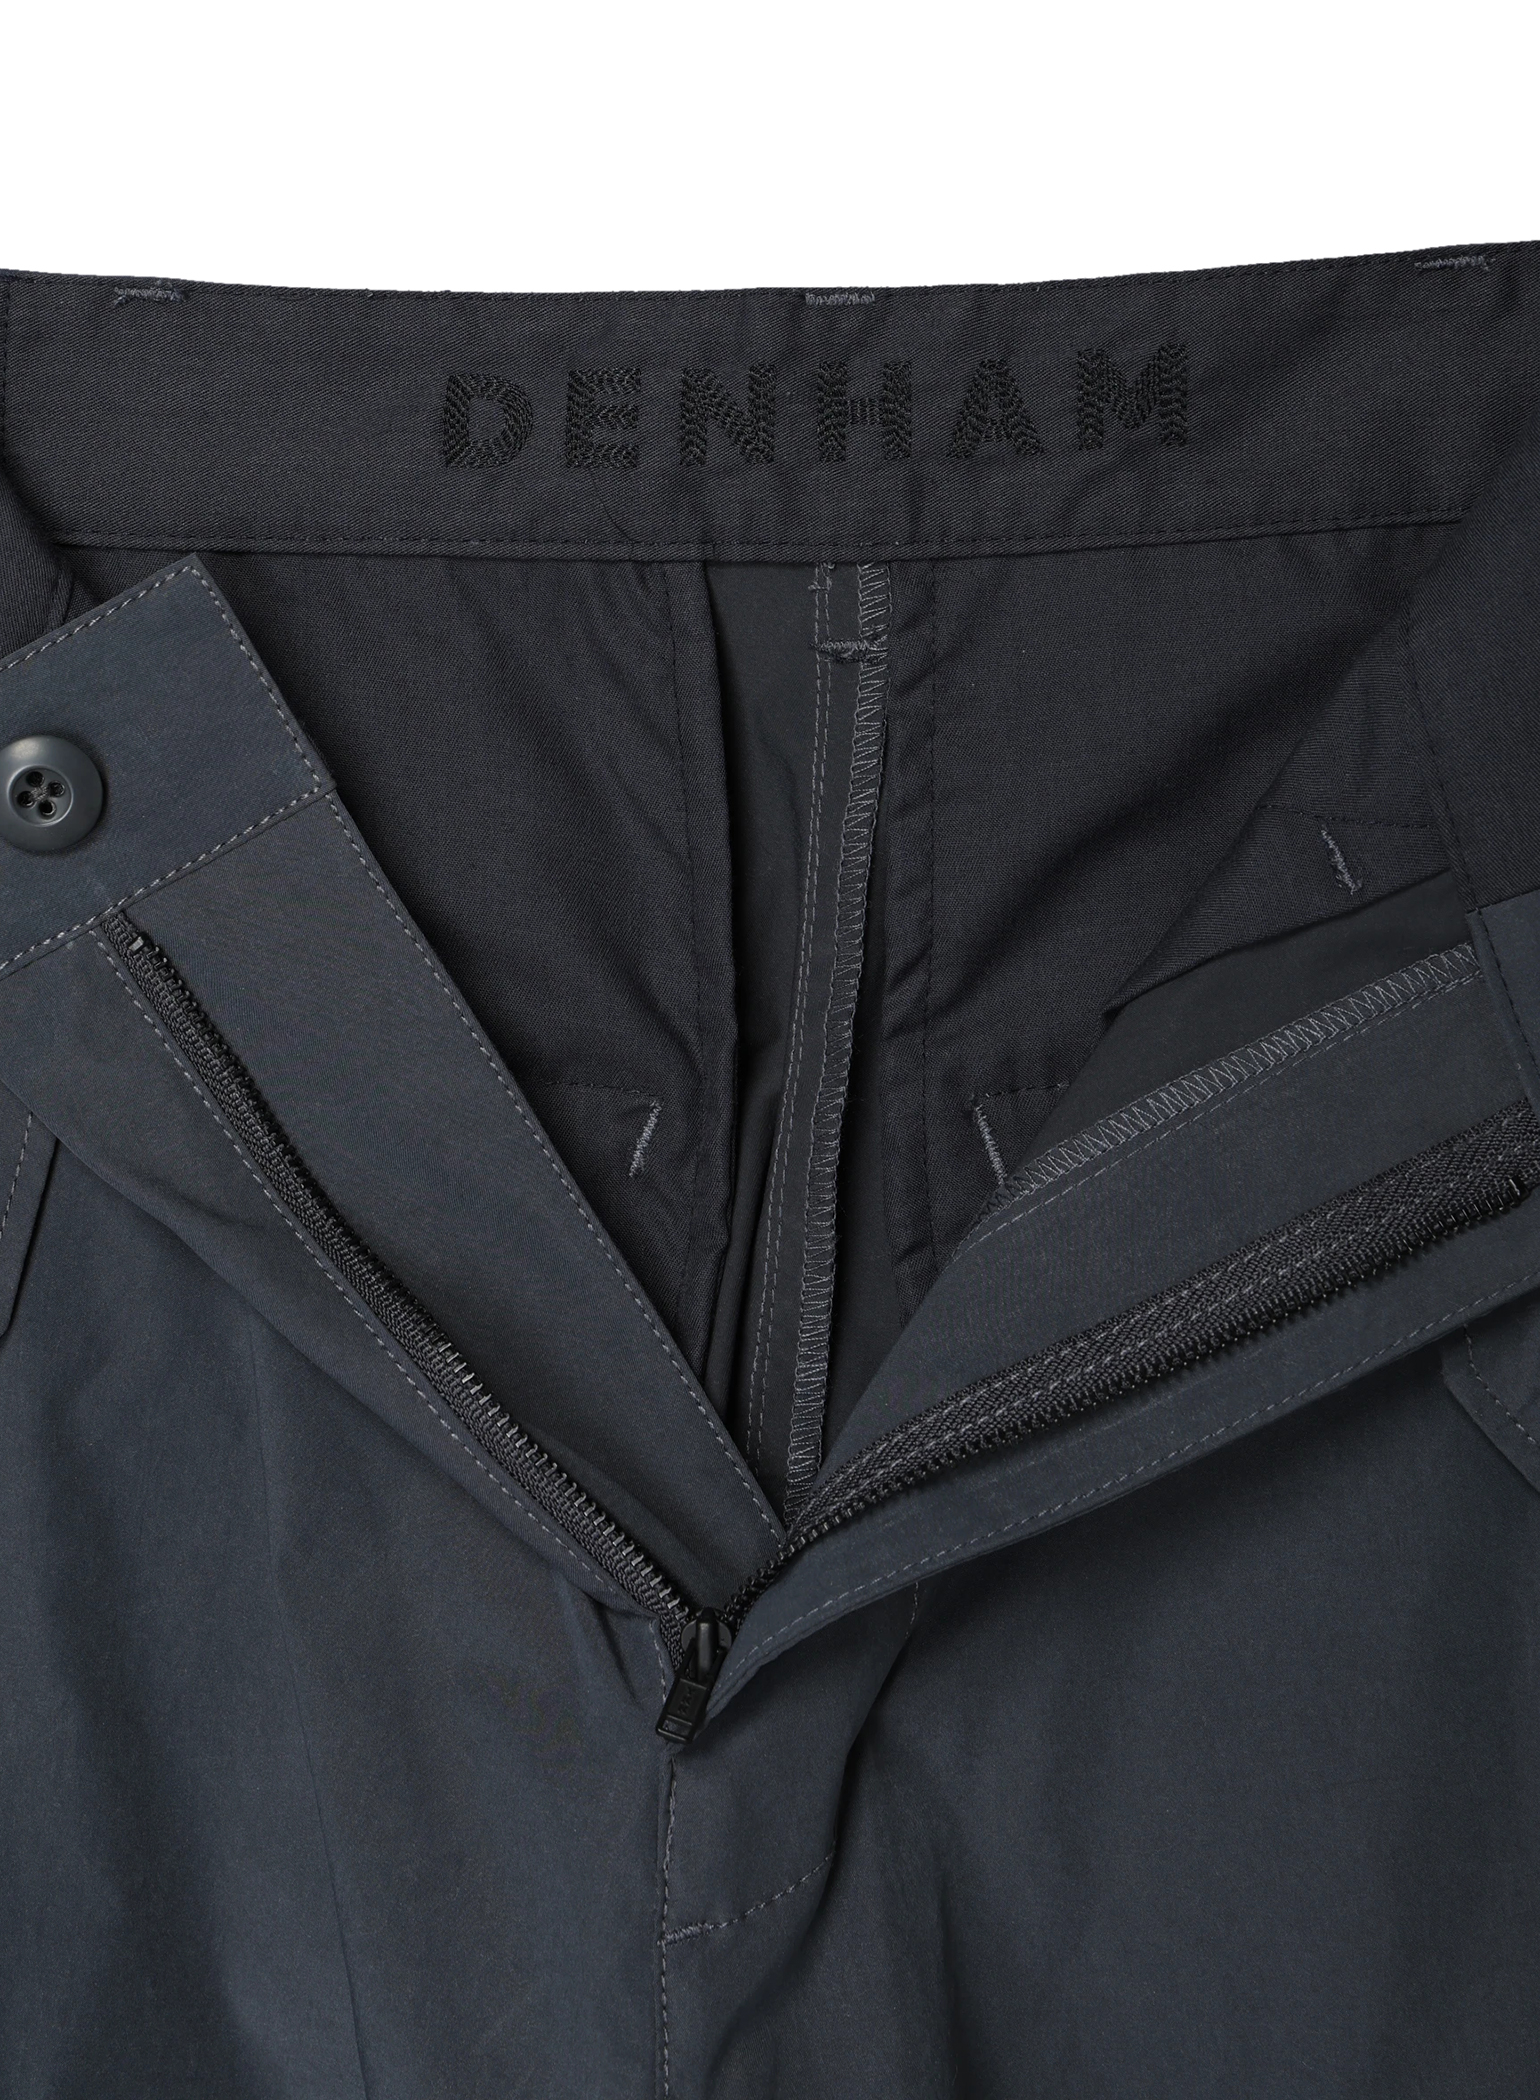 DENHAM(デンハム) |TECHNICAL M-65 PANTS